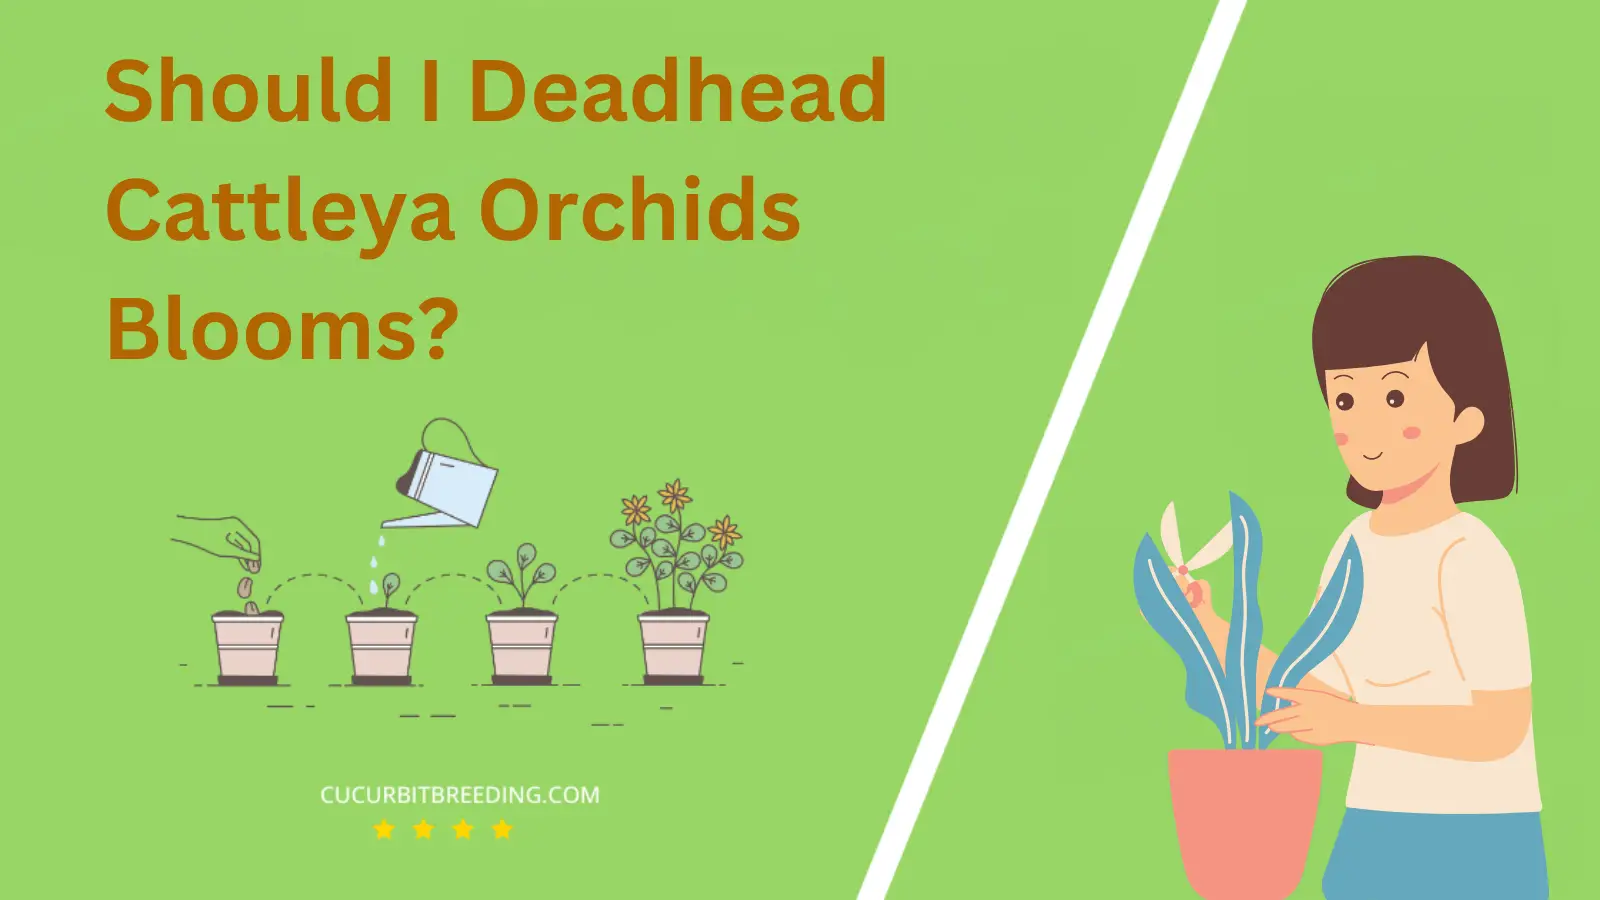 Should I Deadhead Cattleya Orchids Blooms?